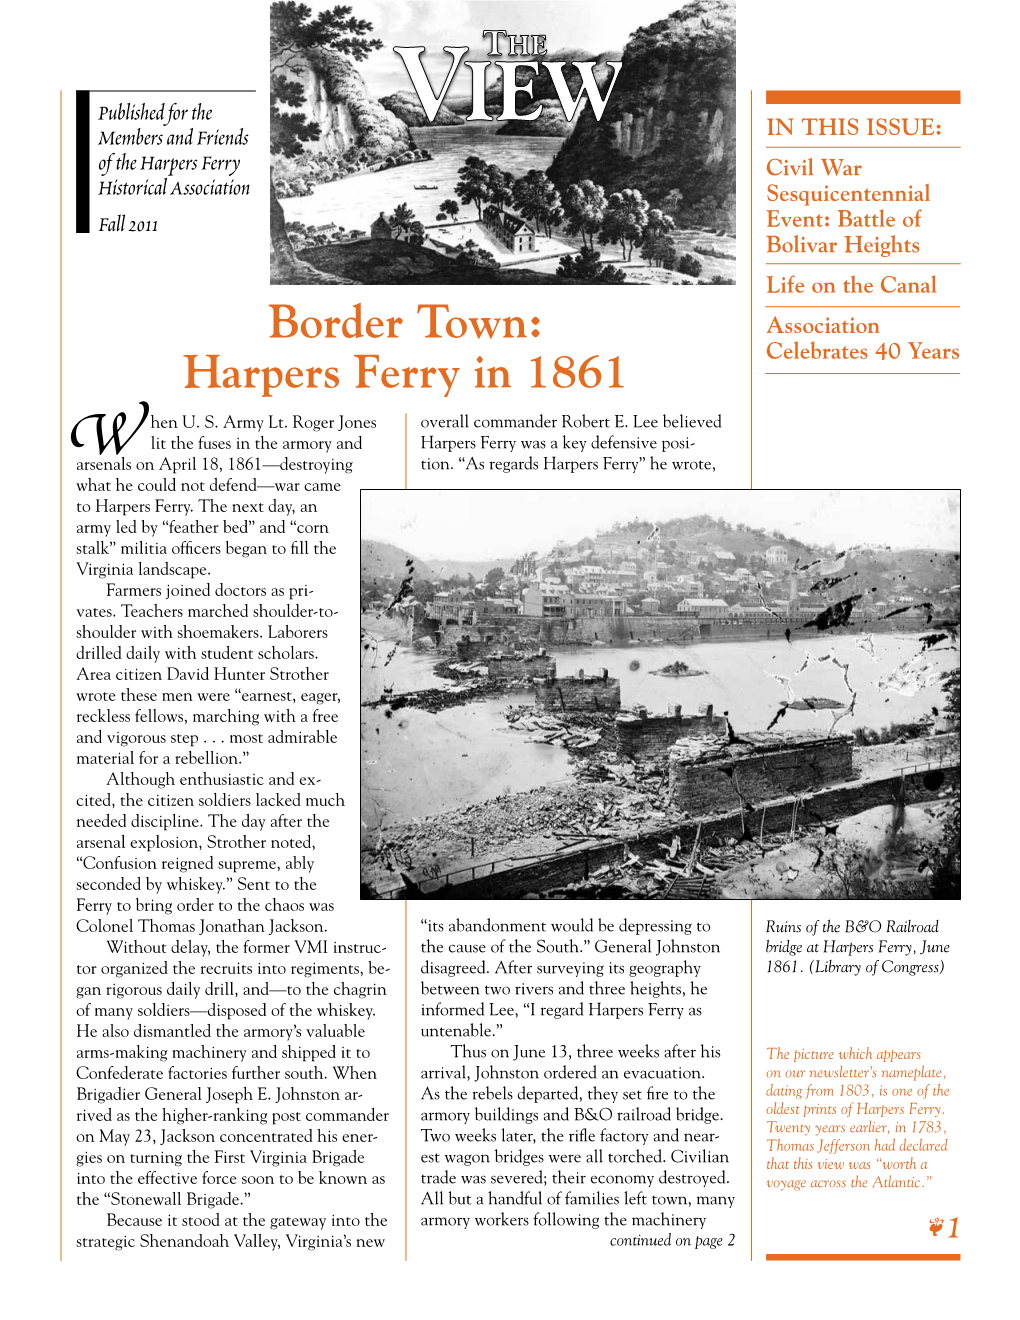 Harpers Ferry in 1861 Celebrates 40 Years Hen U